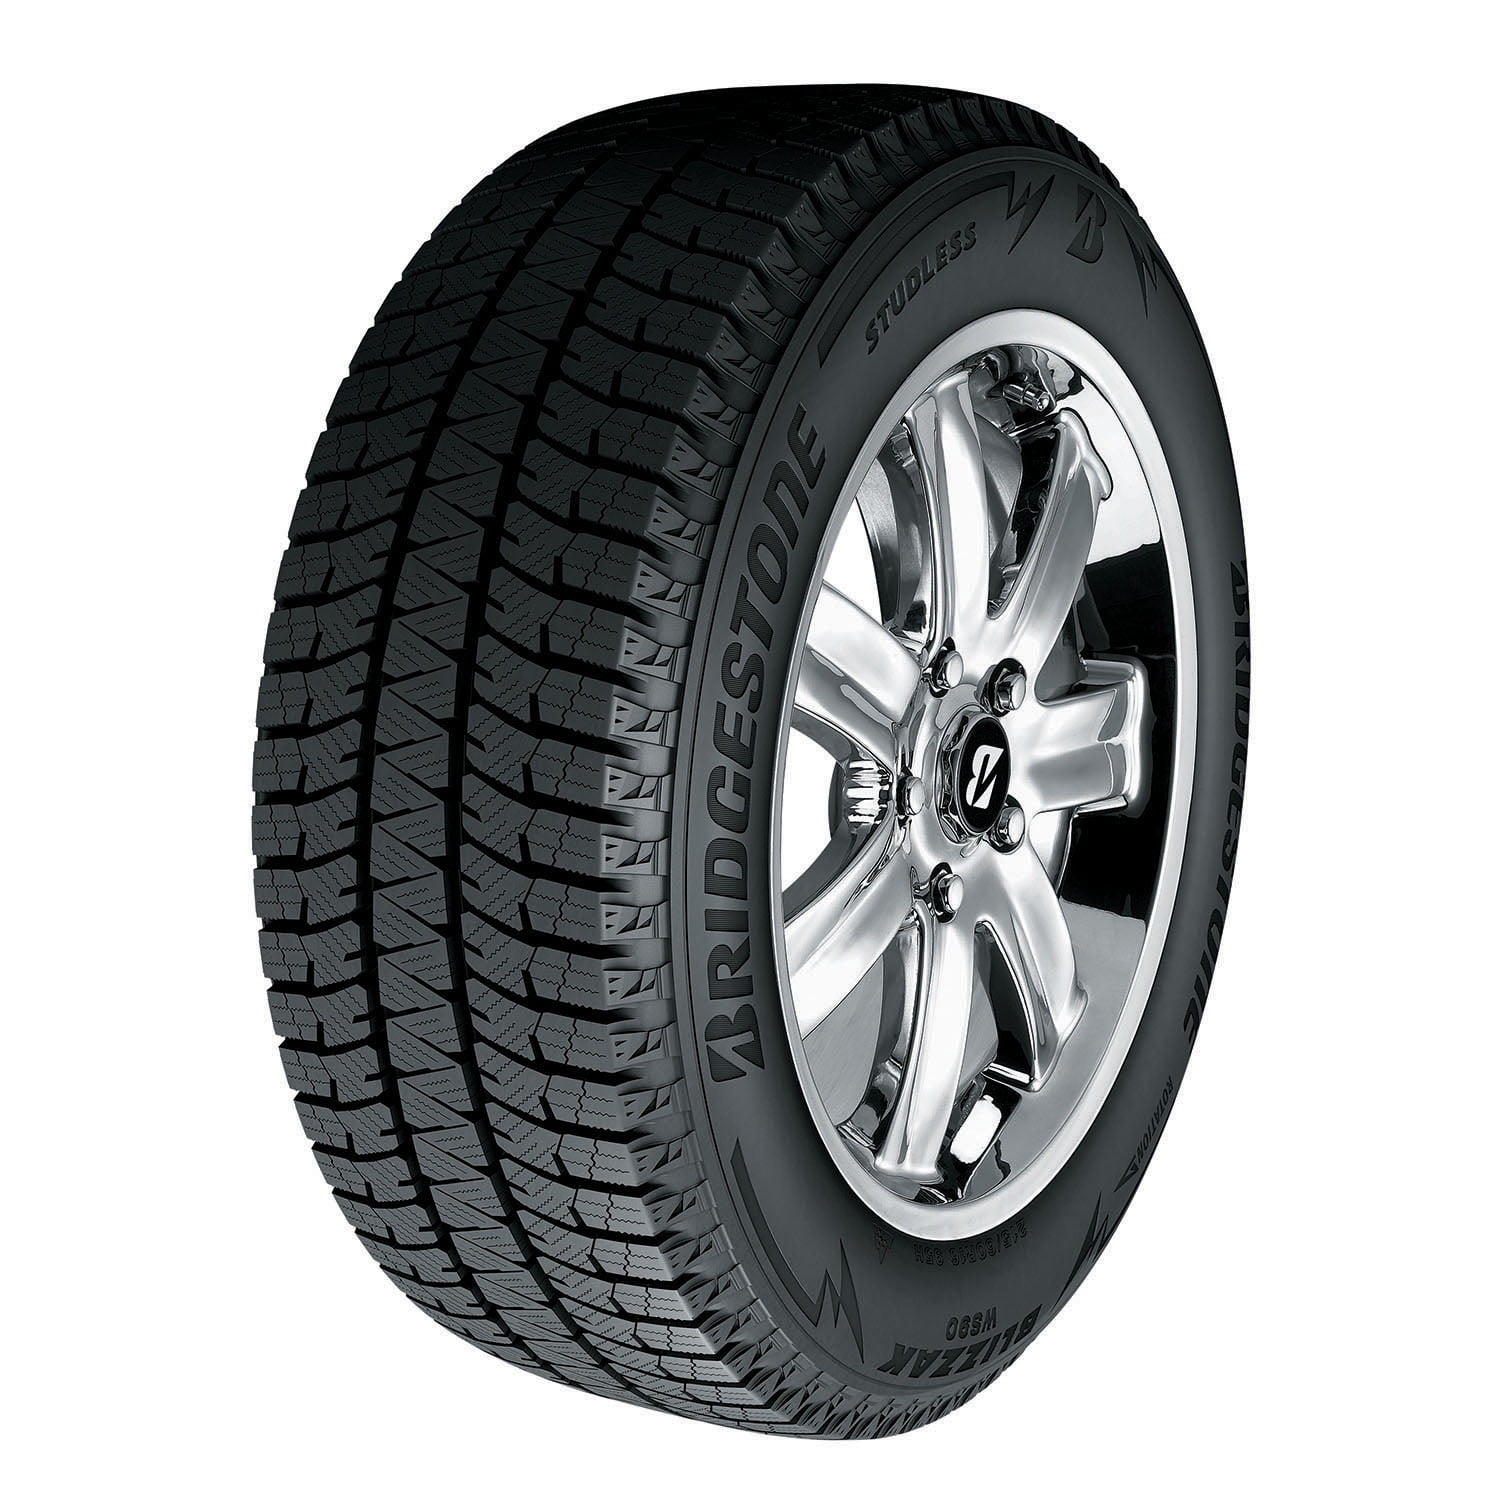 Bridgestone Blizzak WS90 Winter 205/65R16 95T Passenger Tire Fits: 2016-21  Chevrolet Malibu L, 2012-13 Toyota Camry Hybrid LE